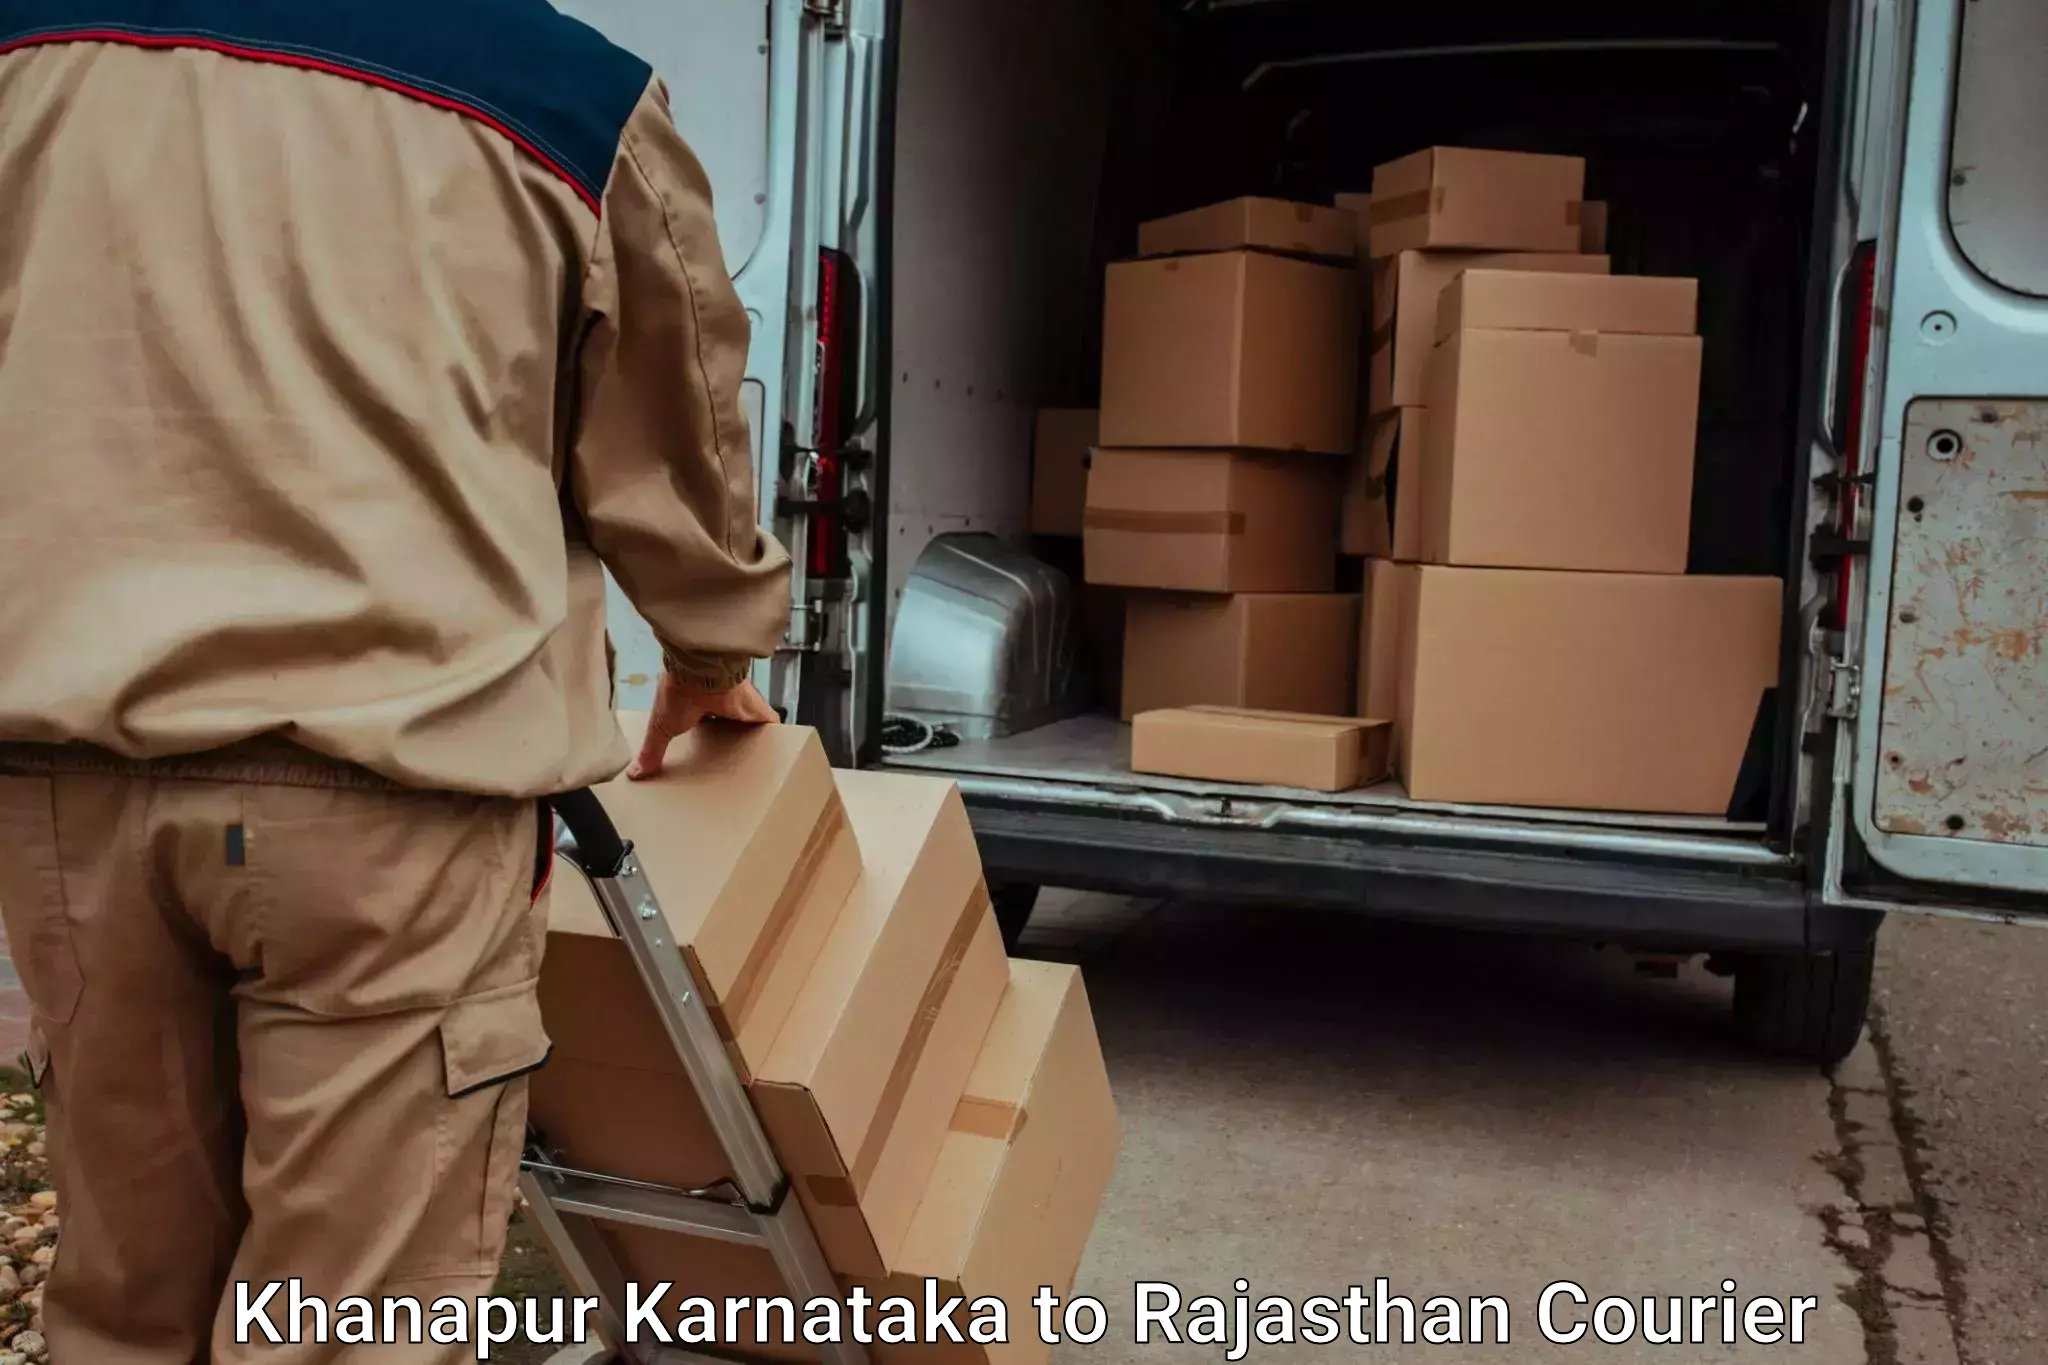 Reliable luggage courier Khanapur Karnataka to Sikar